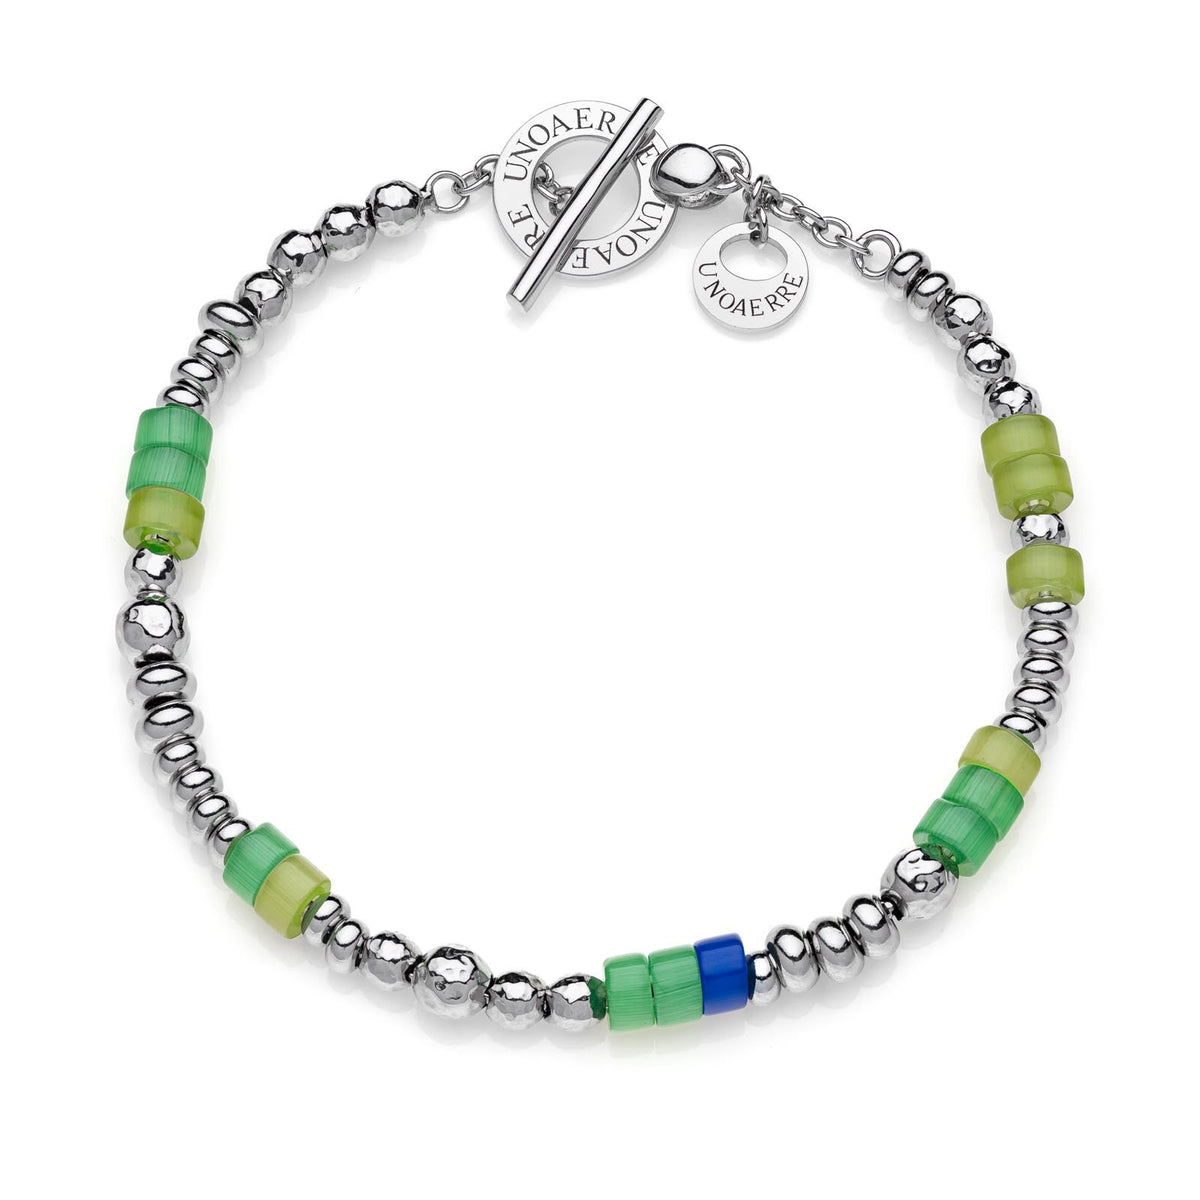 White silver bracelet with green stones Unoaerre 703YBV1745170 6047 